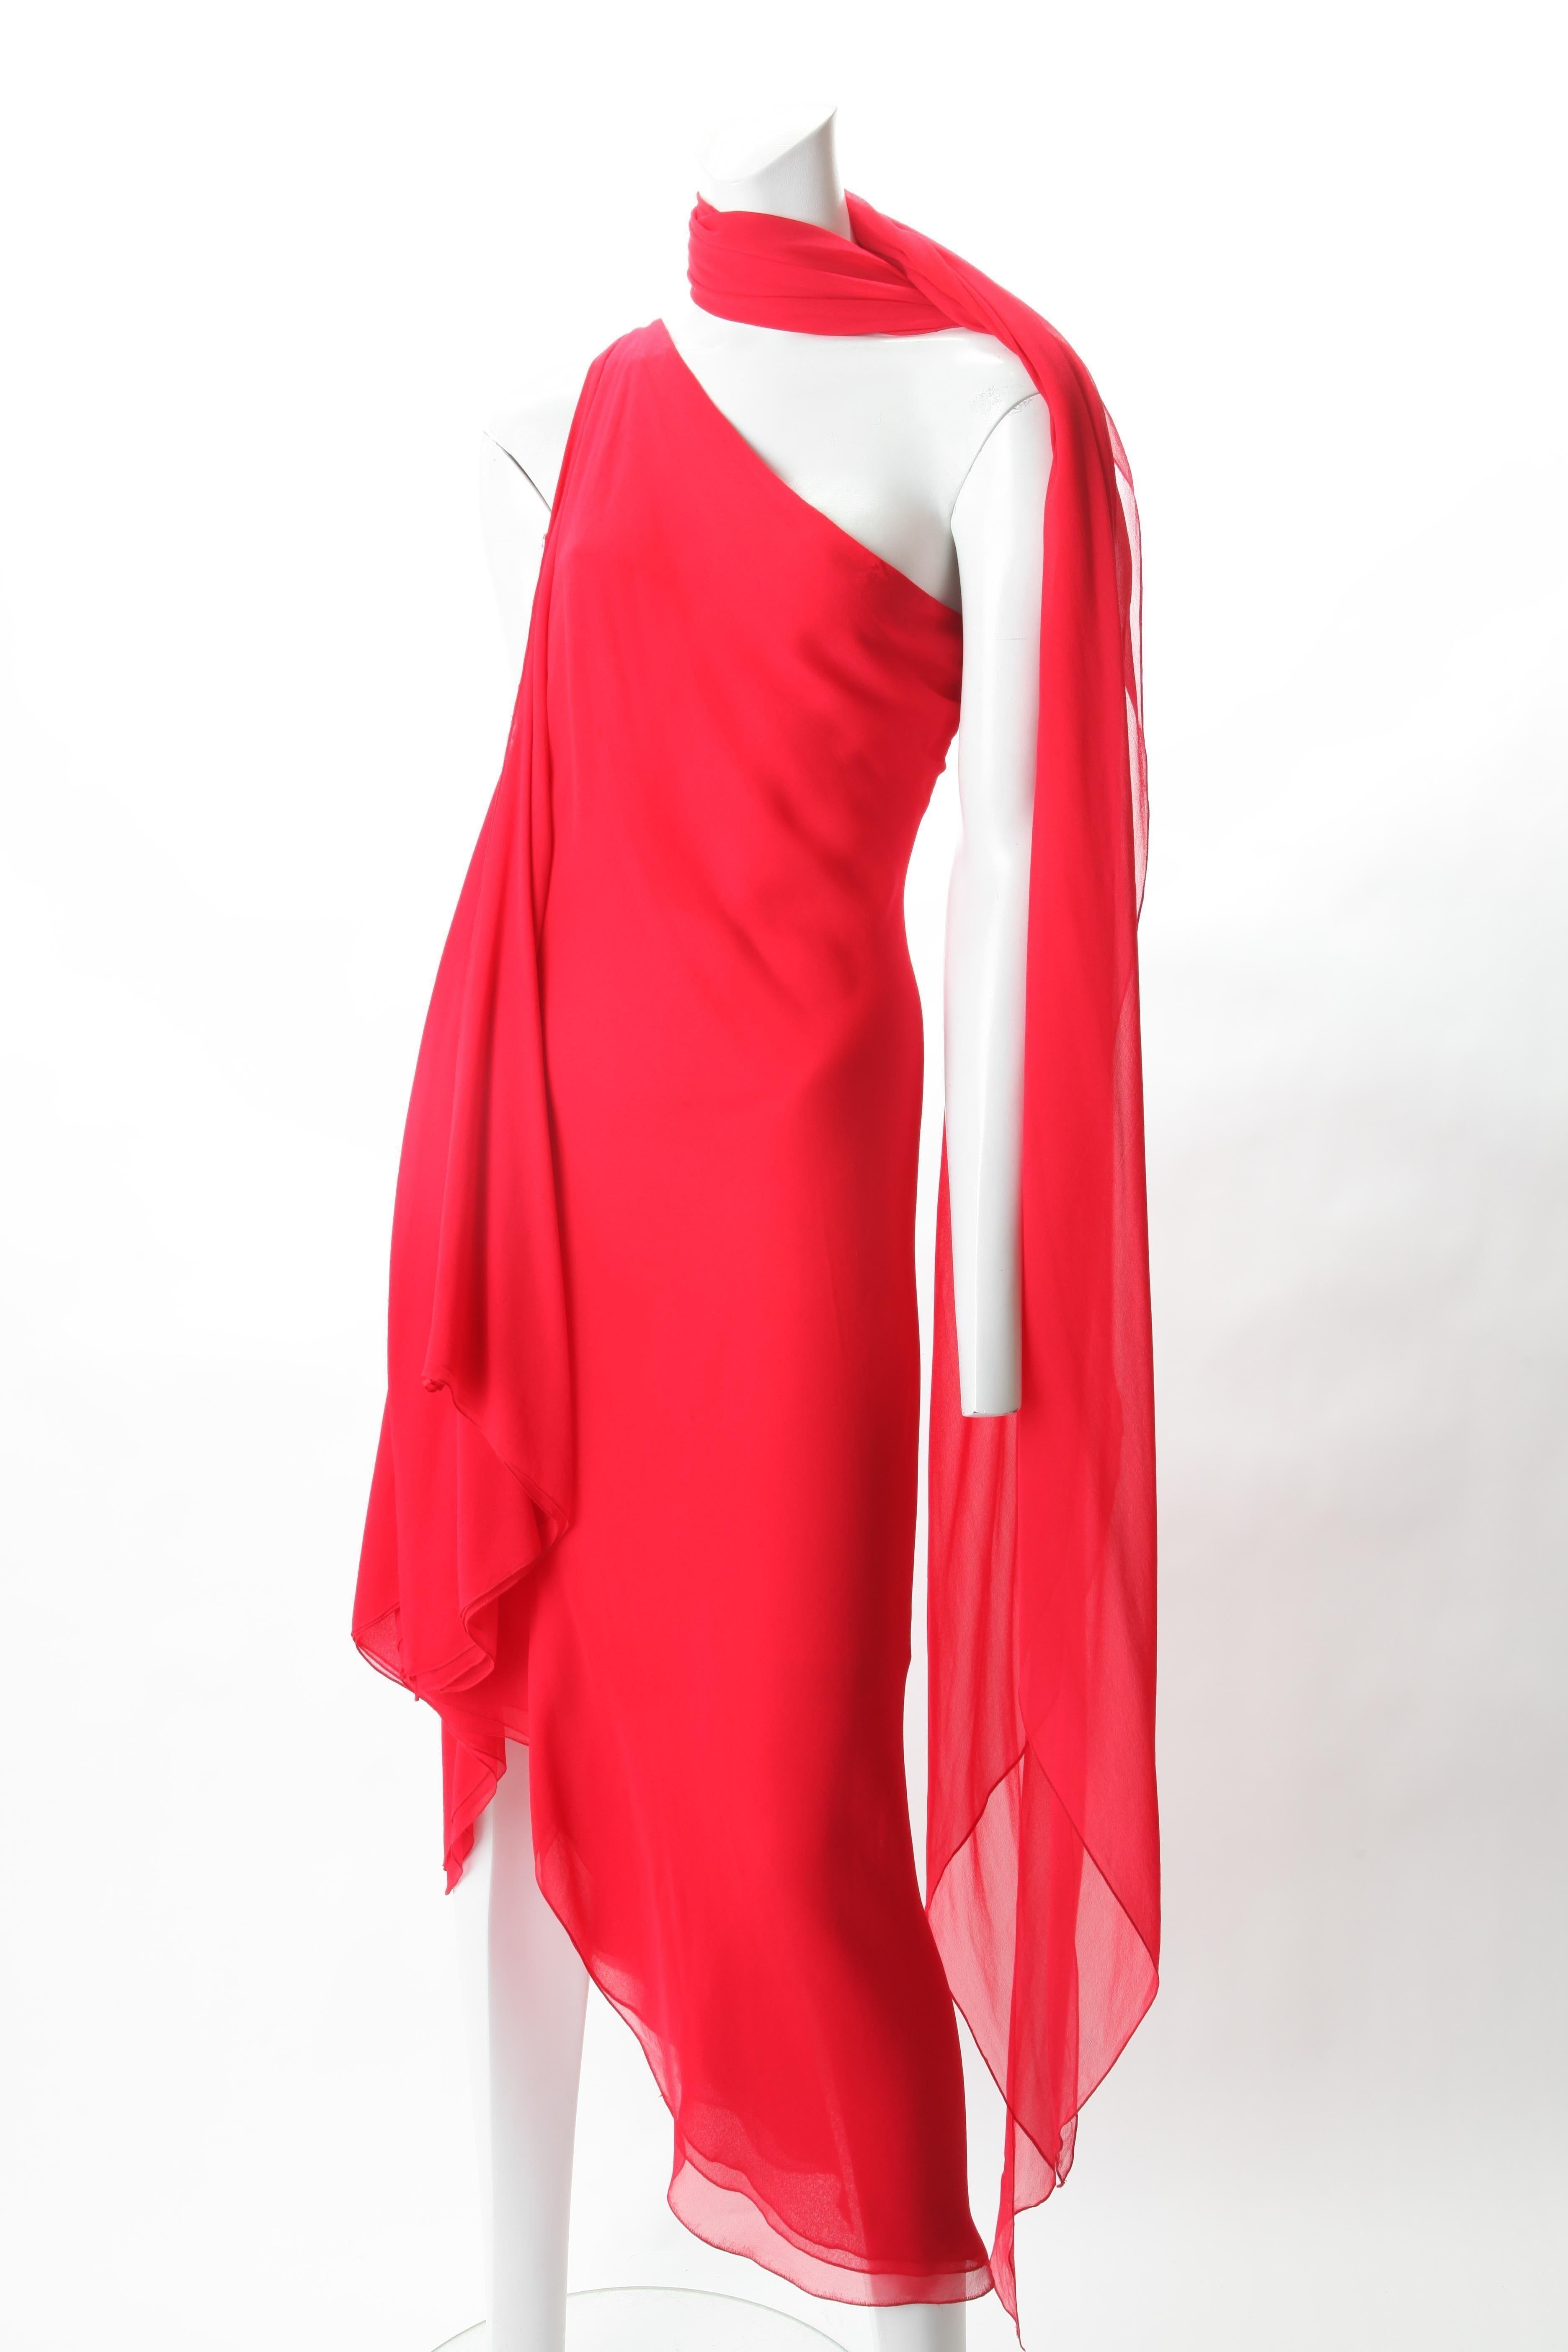 Women's Halston Red Chiffon Dress with Sash, c. 1970s.